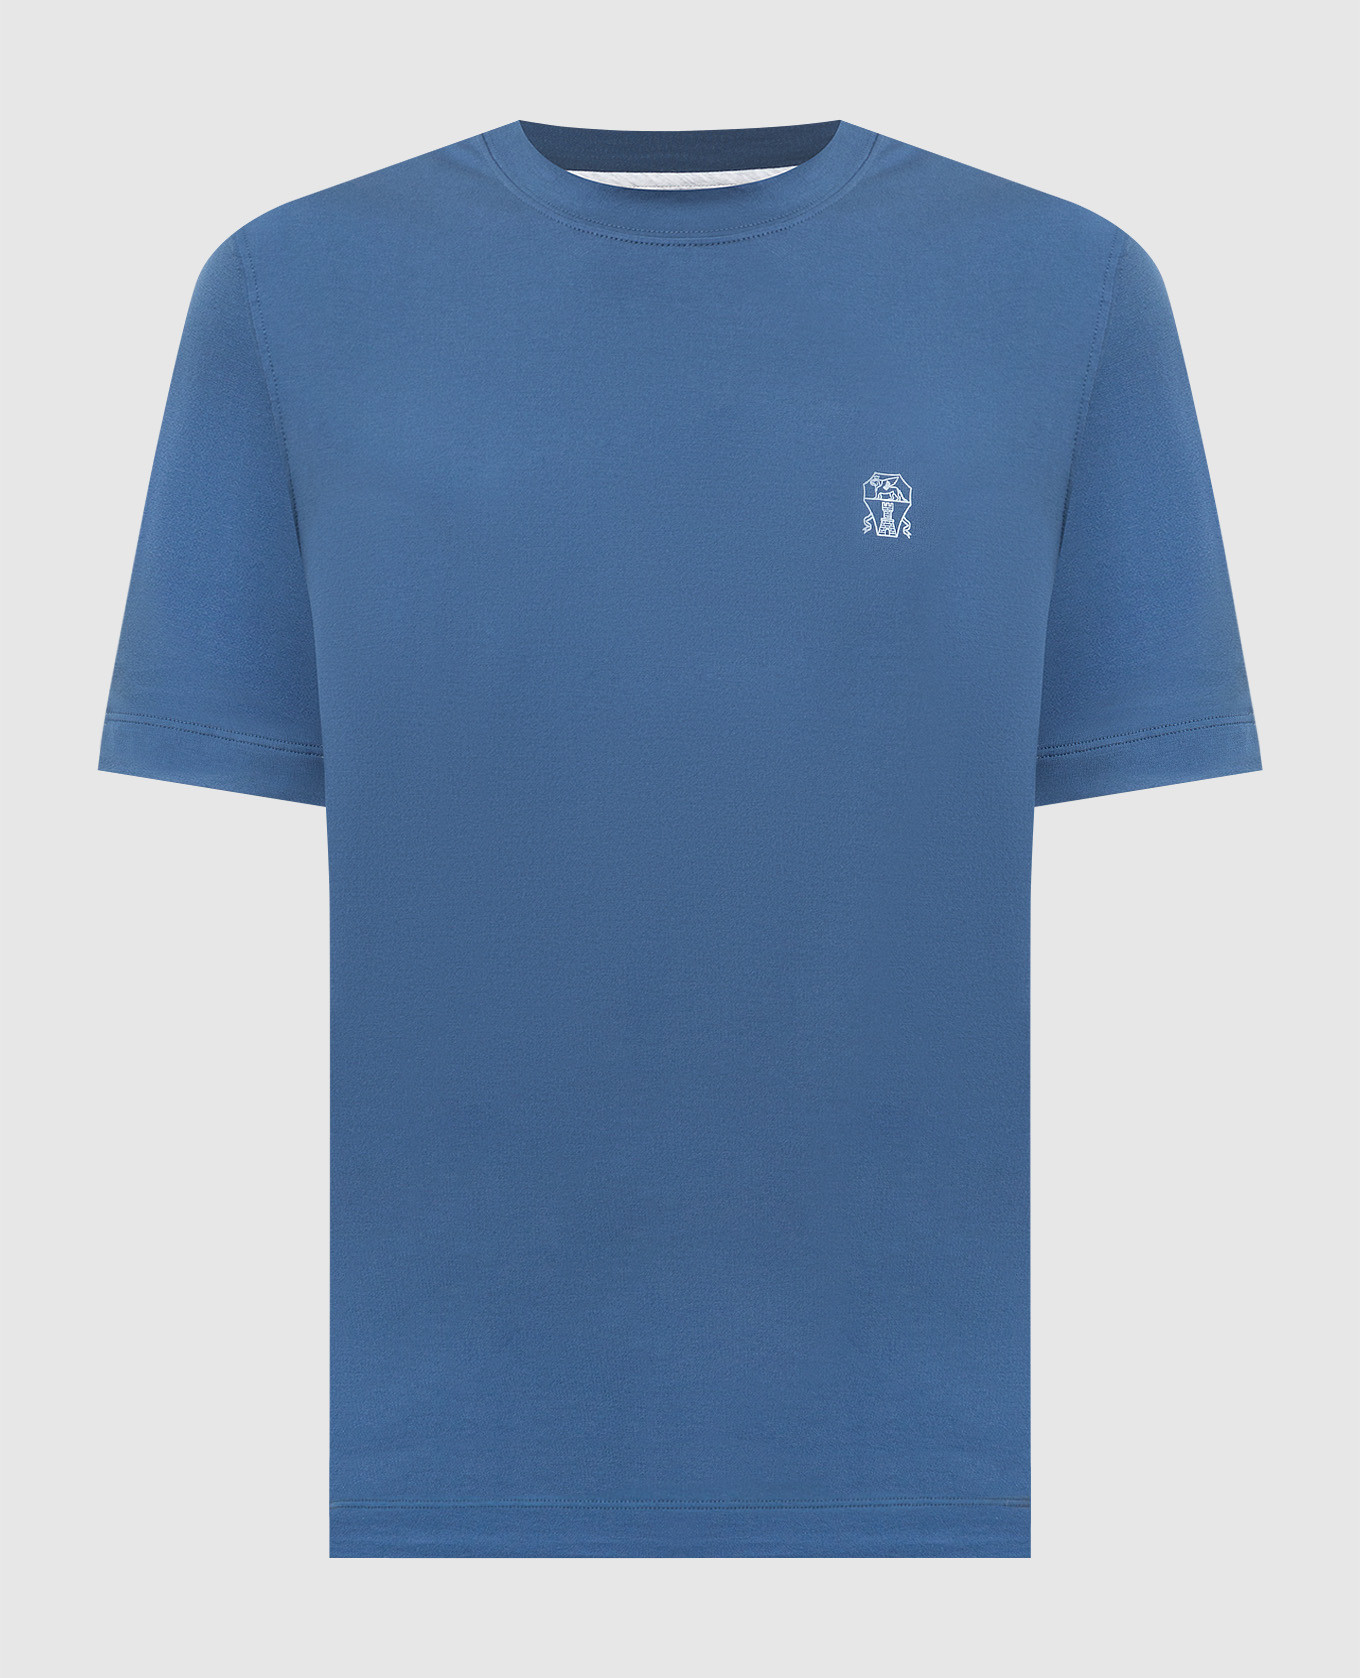 Blue T-shirt with emblem